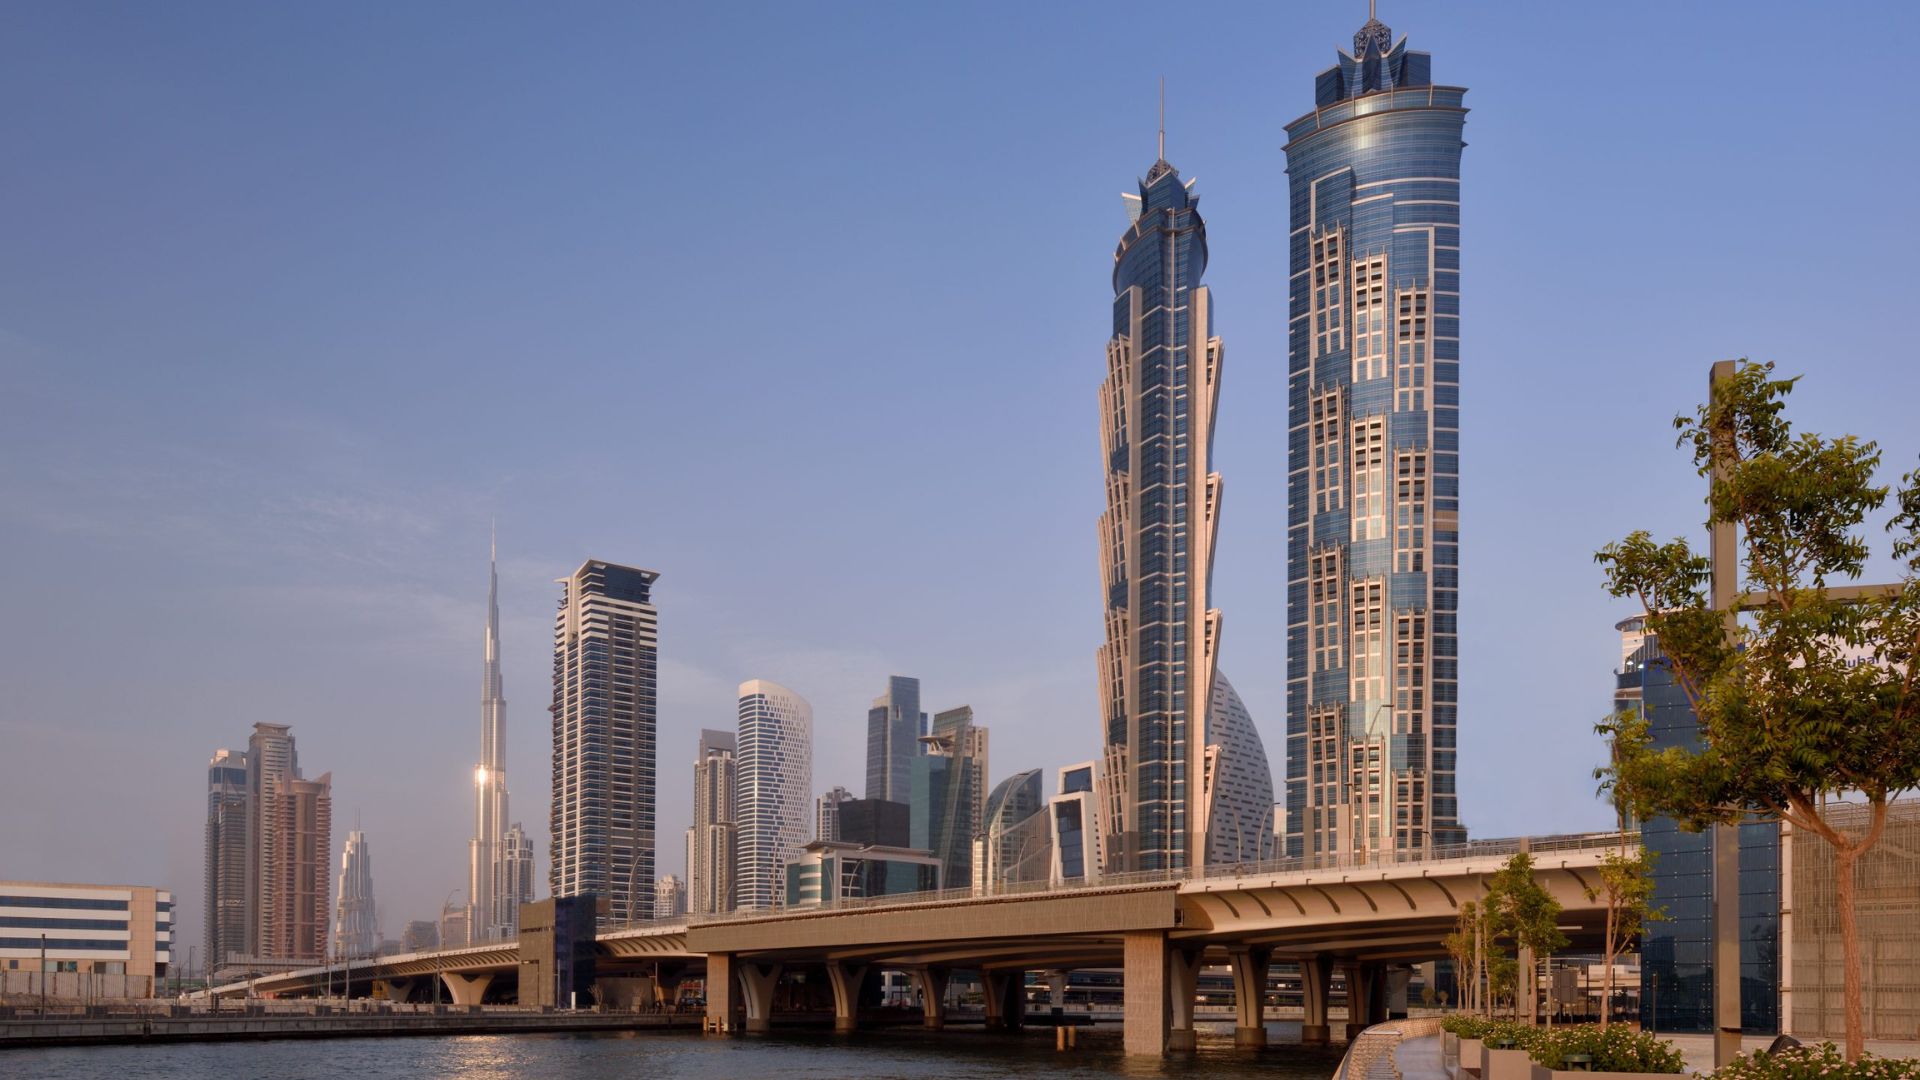 Exploring the Tallest Buildings of Dubai